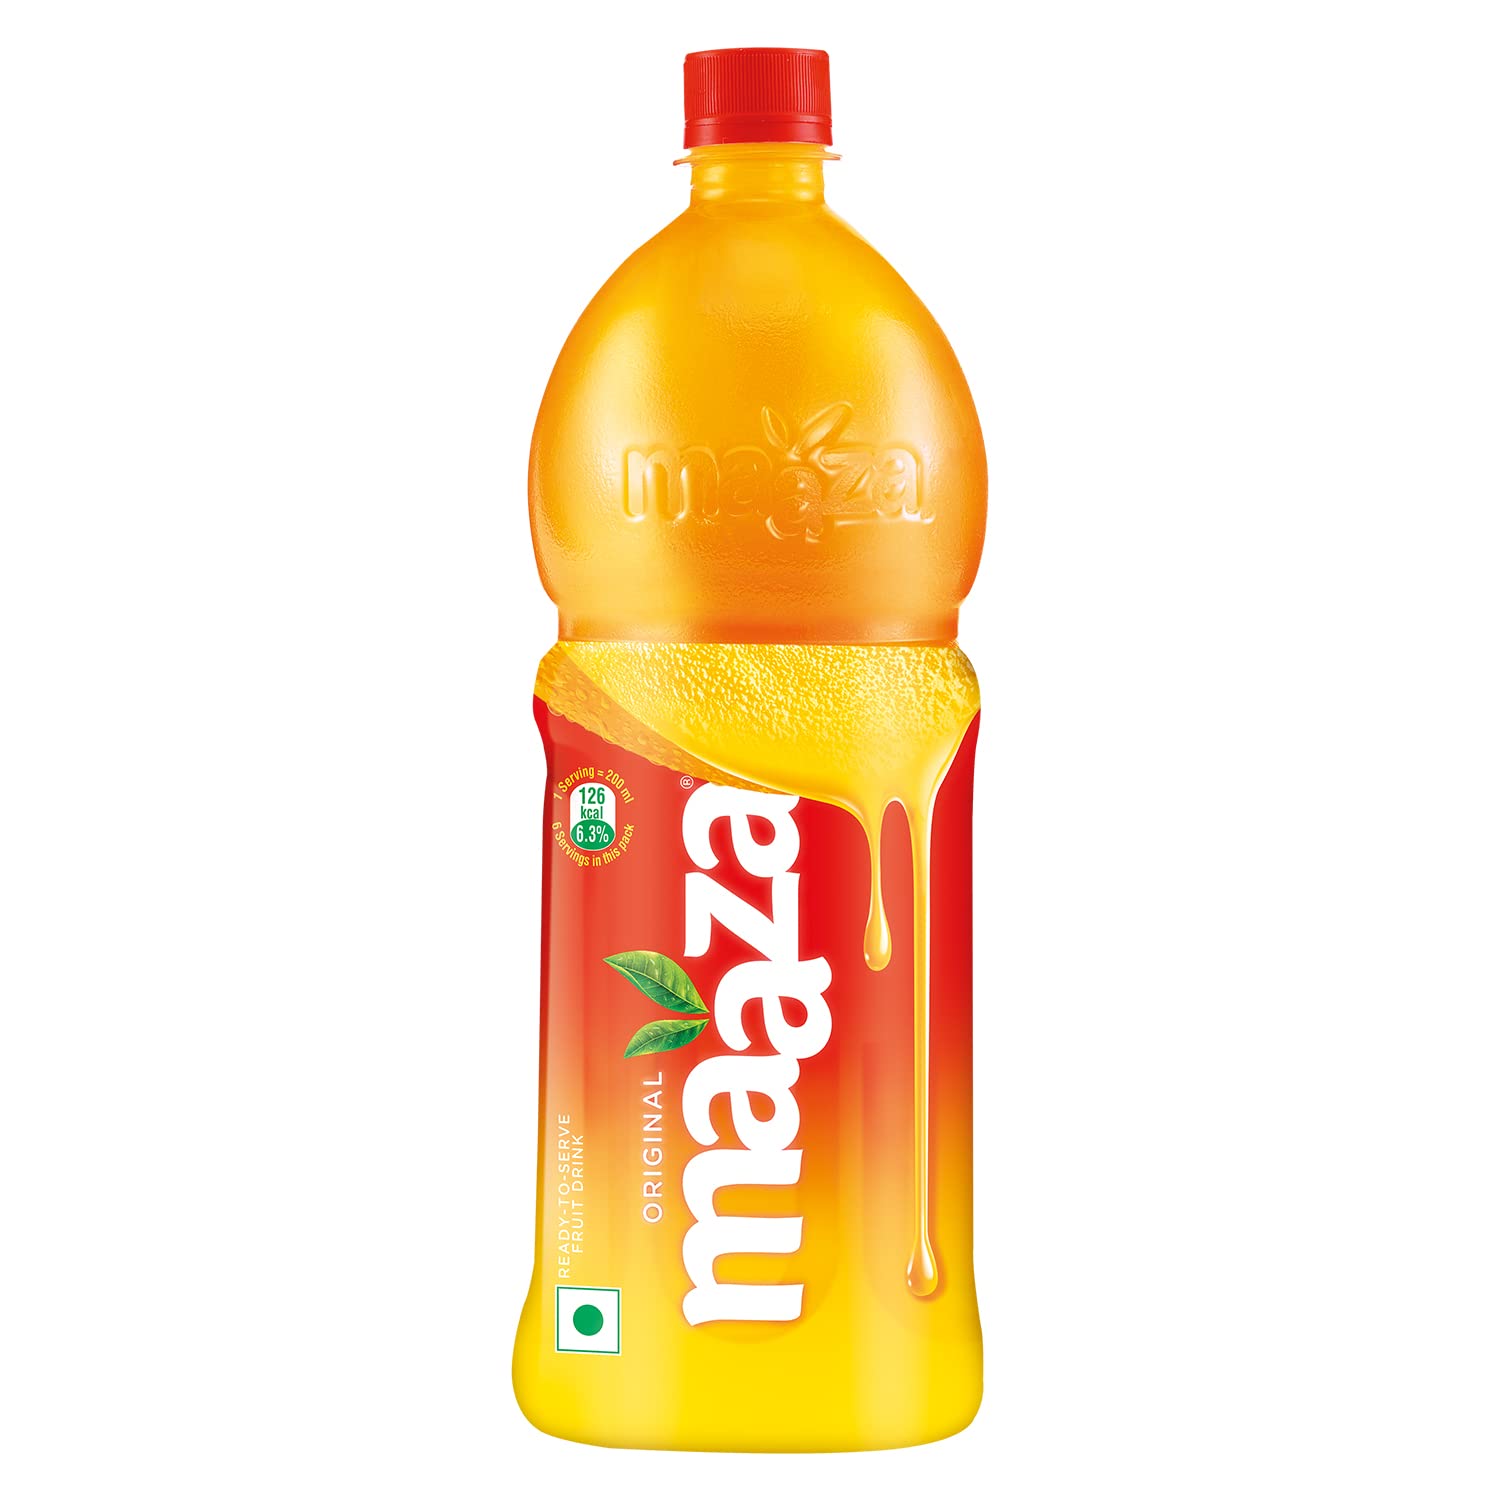 Maaza soft drink brands